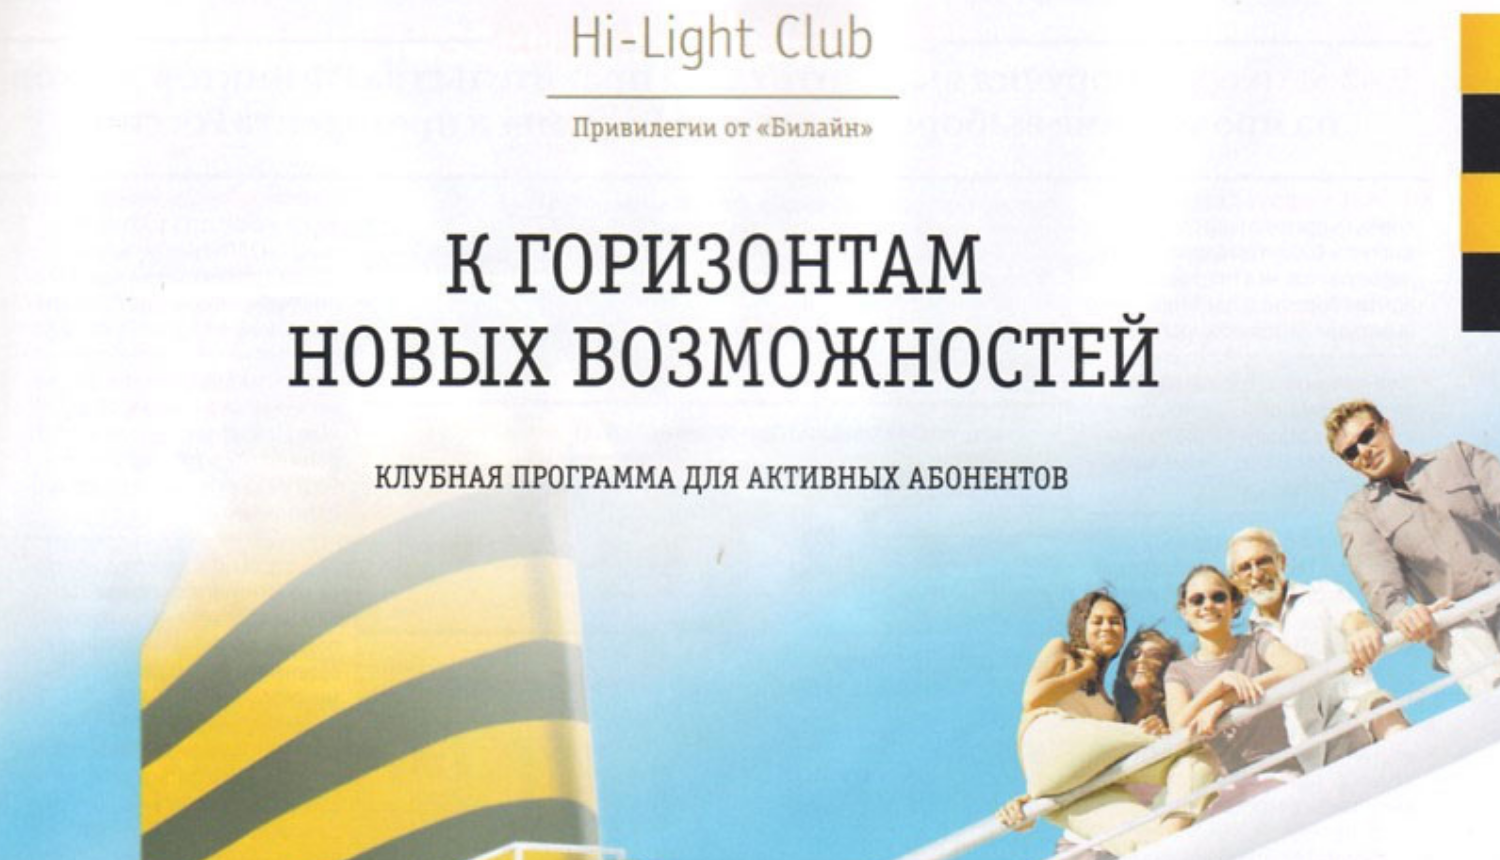 Условия программы билайн "Hi-Light Club"<br>